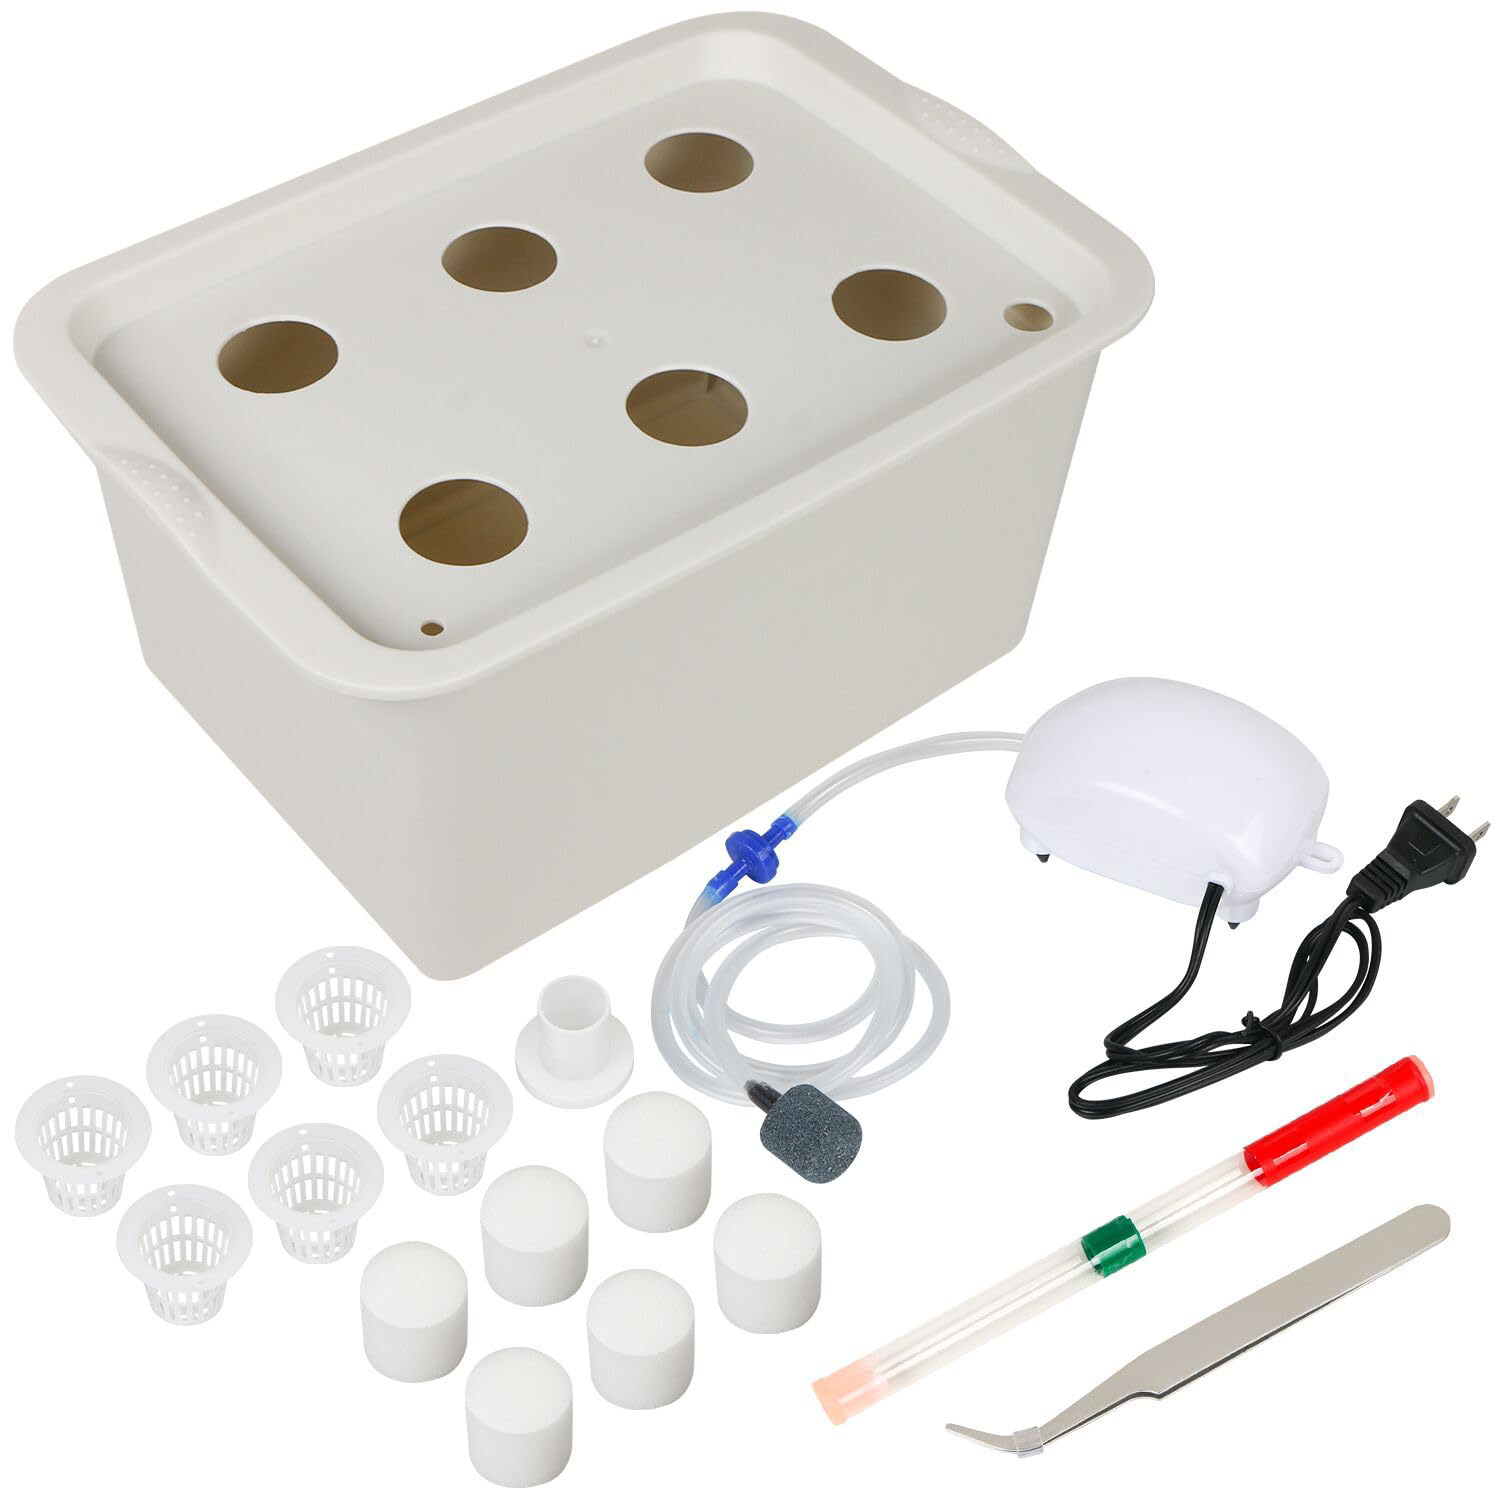 Aunifun Hydroponics Grower Kit DIY Self Watering Indoor Hydroponics Tools DWC